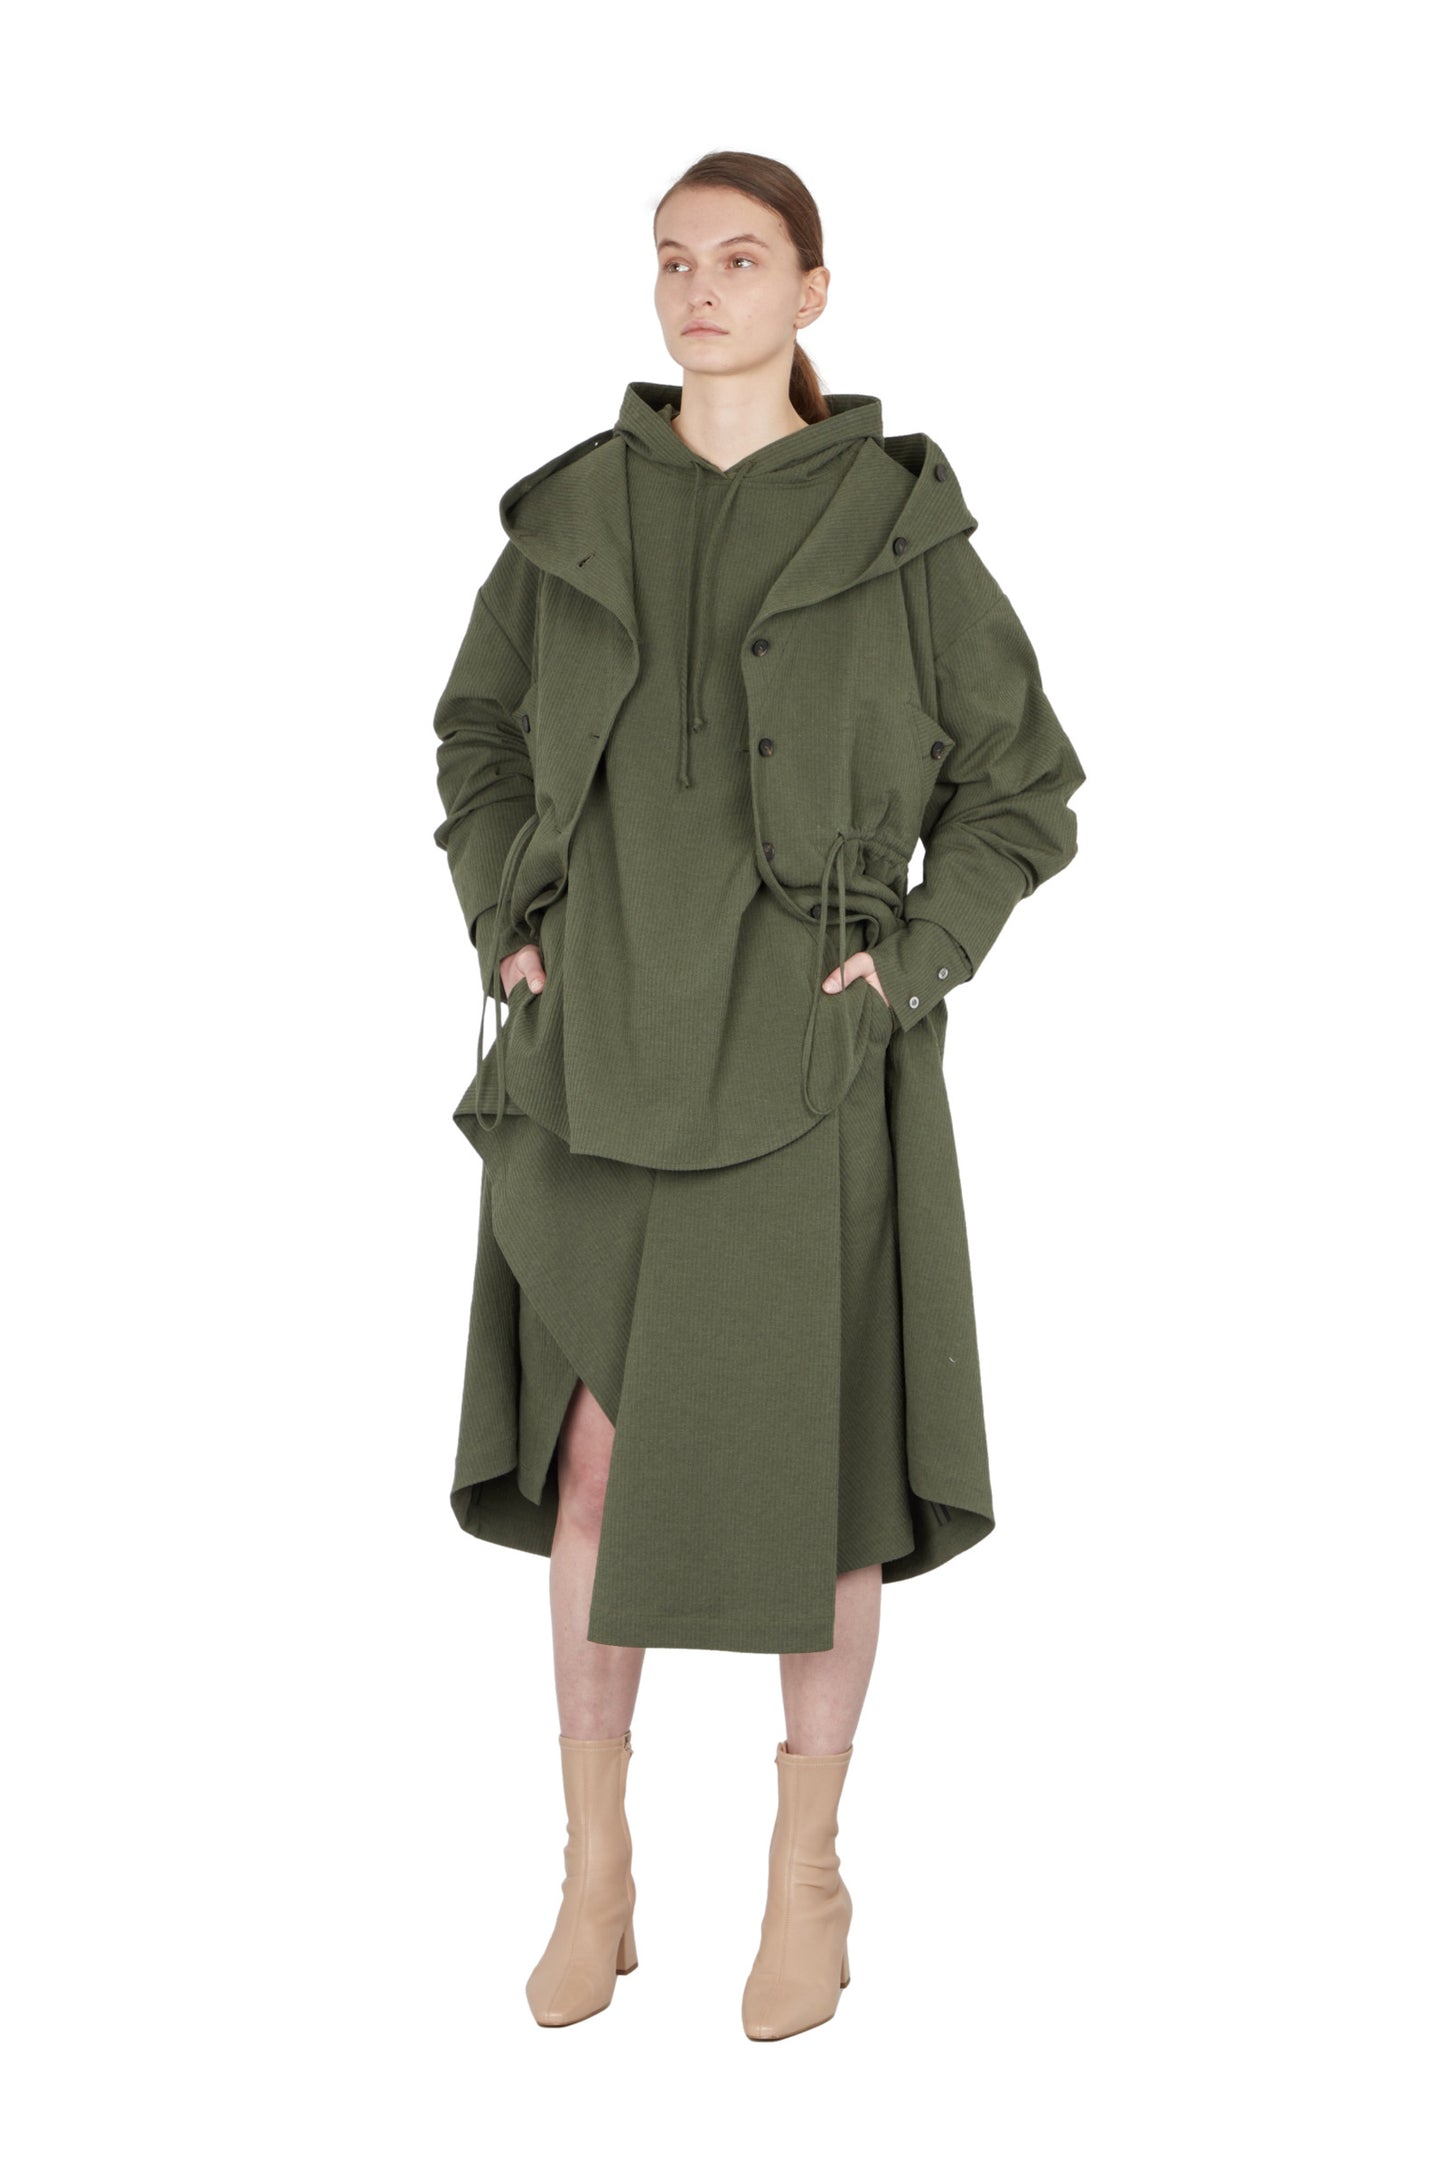 Military Green Asymmetric Skirt